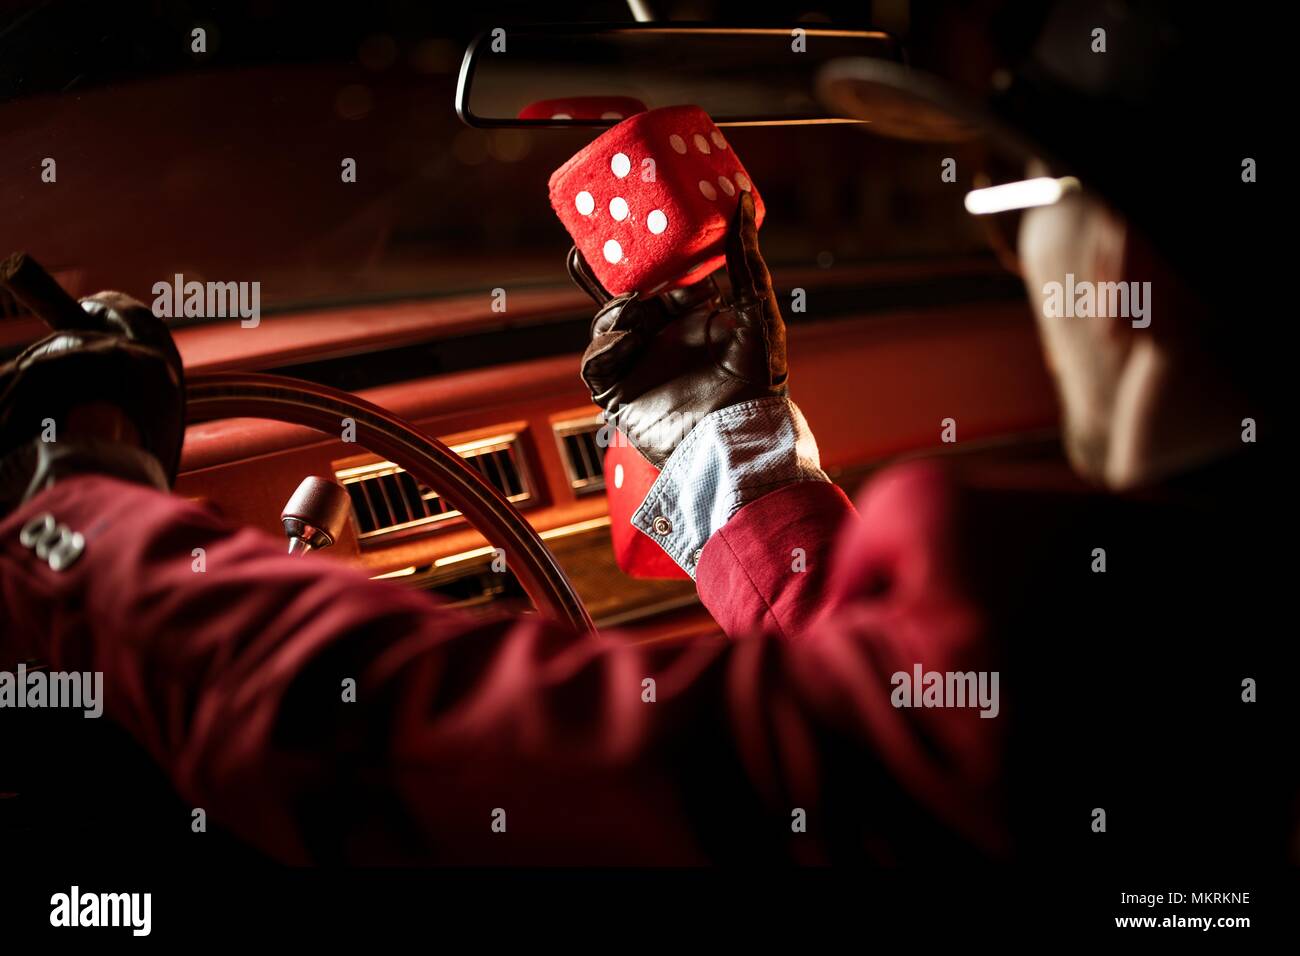 Casino Lucky desean concepto. Jugador de Poker de Casino hablando con su Lucky Red dados dentro del coche clásico. Foto de stock